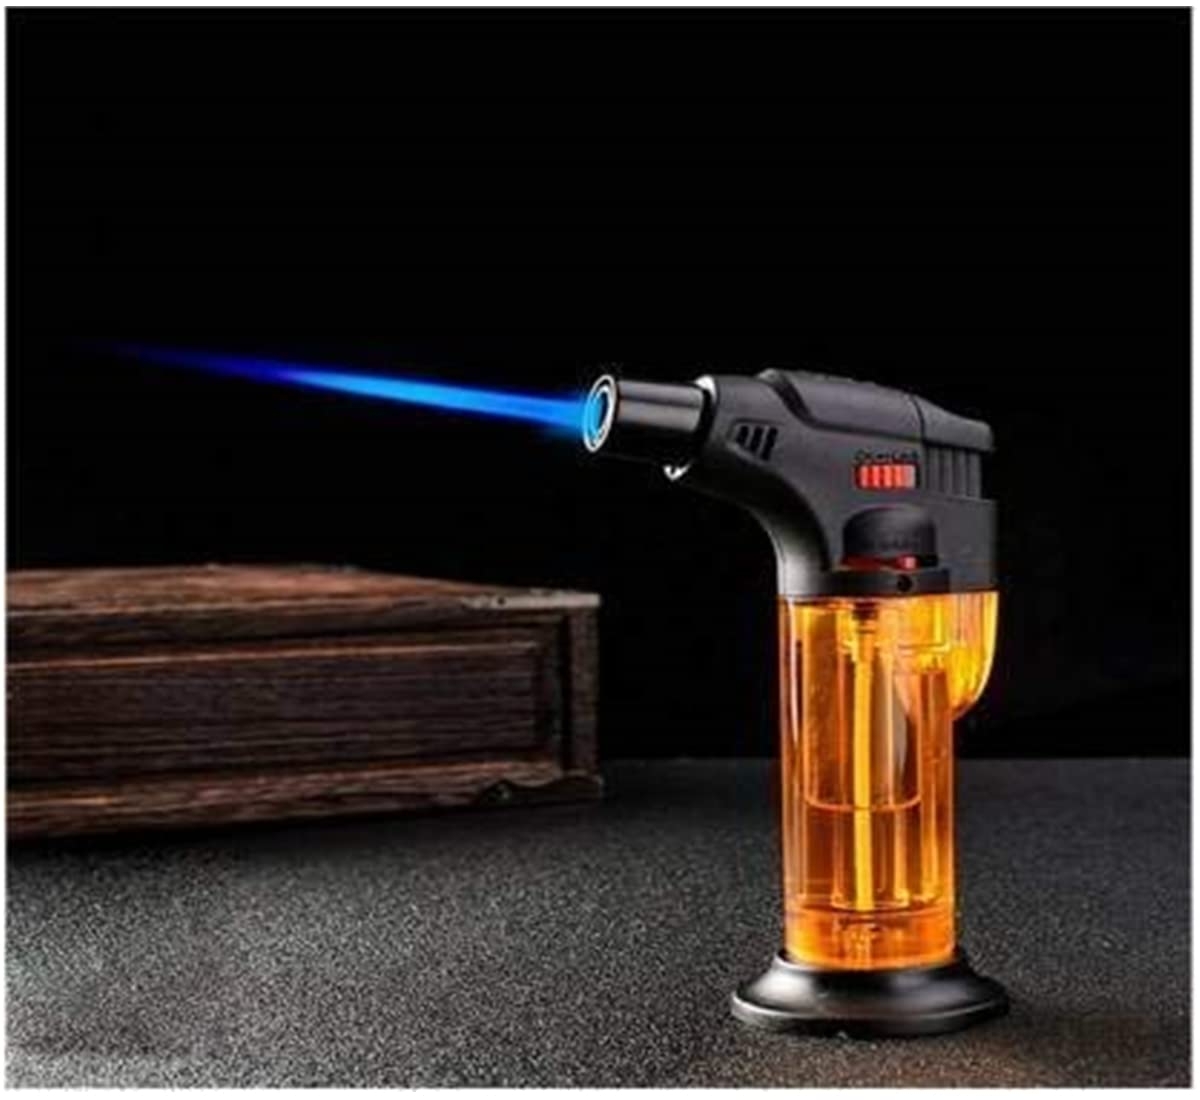 Debire Jet Flame Gas Lighter | Windproof ABS Strong Plastic Handy Liter, Built-in Safety Lock, Multicolored (Red/Black/Orange/Green/Blue) (Pack of 1) Cigarette Lighter